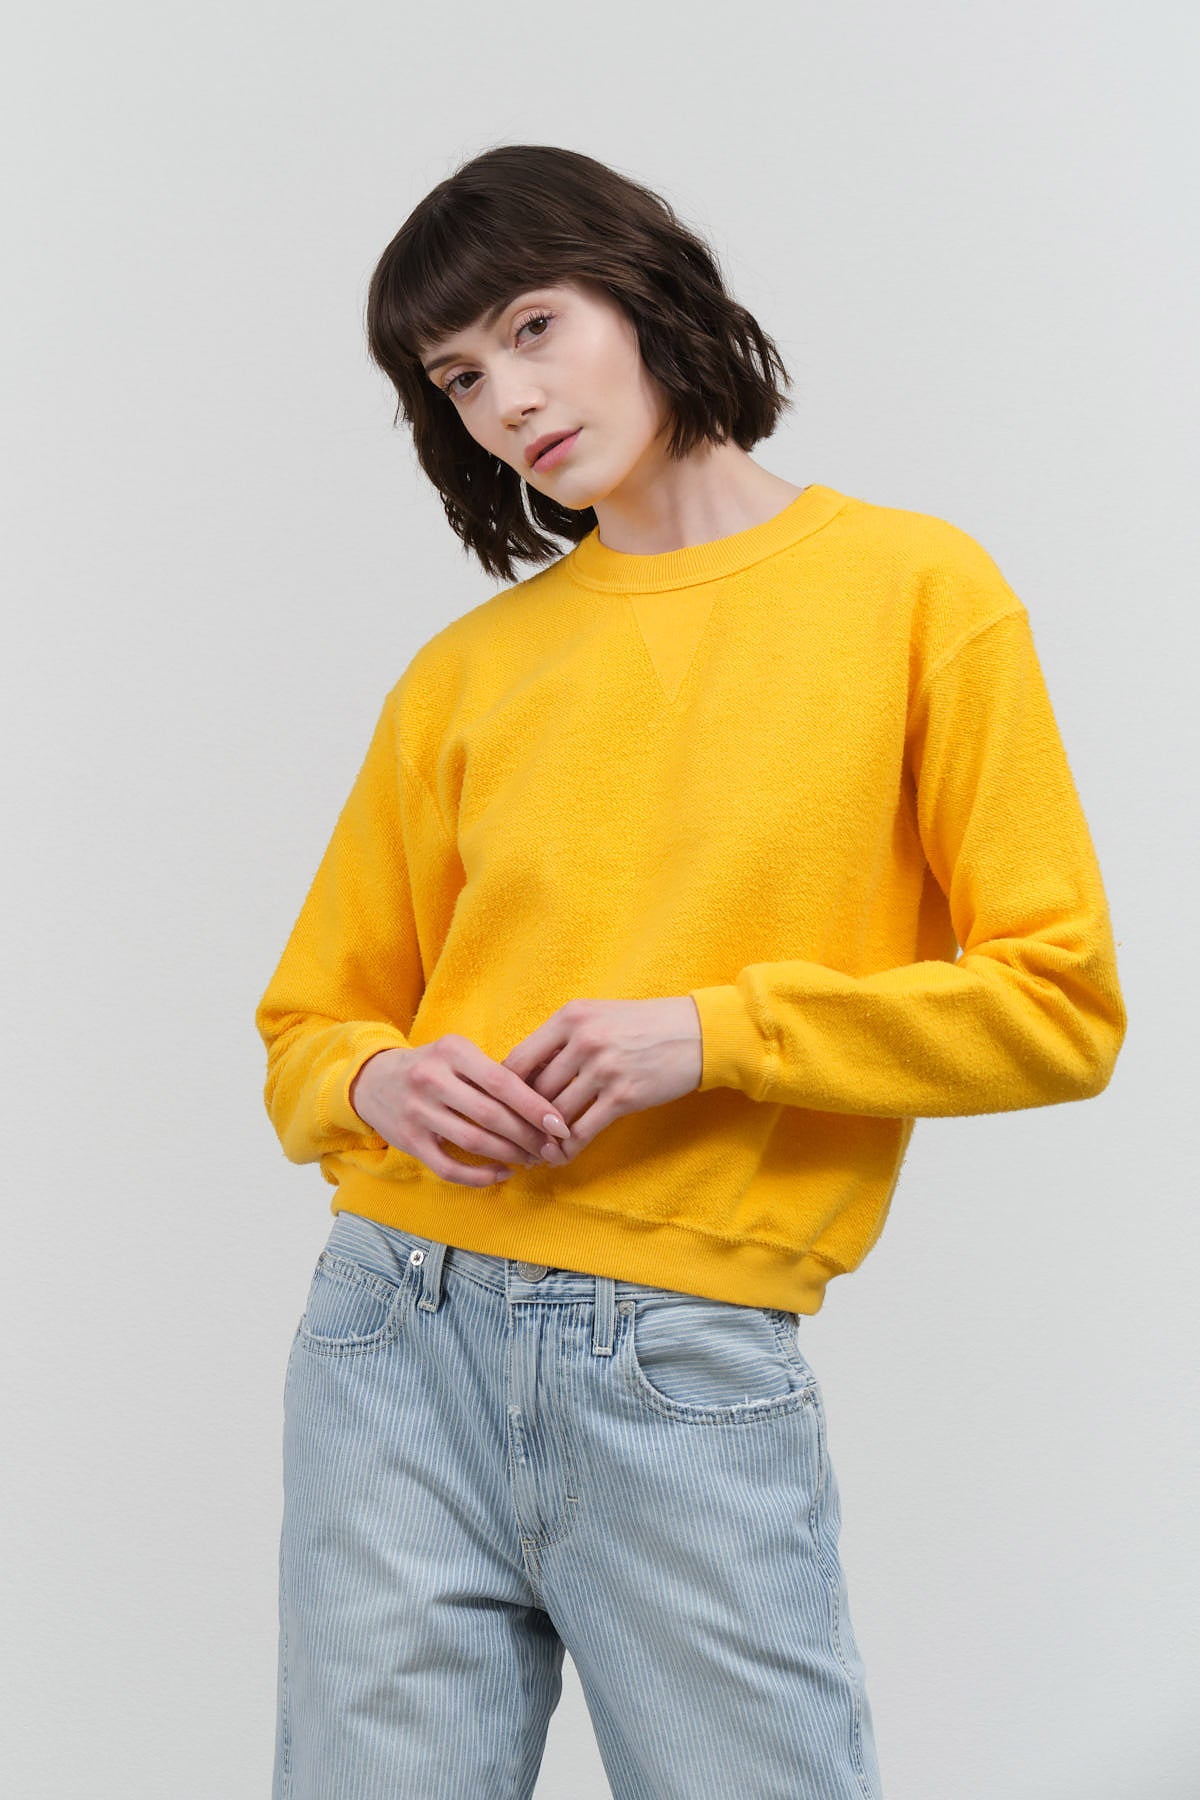 Sunray Sportswear Hina Sweatshirt in Citrus